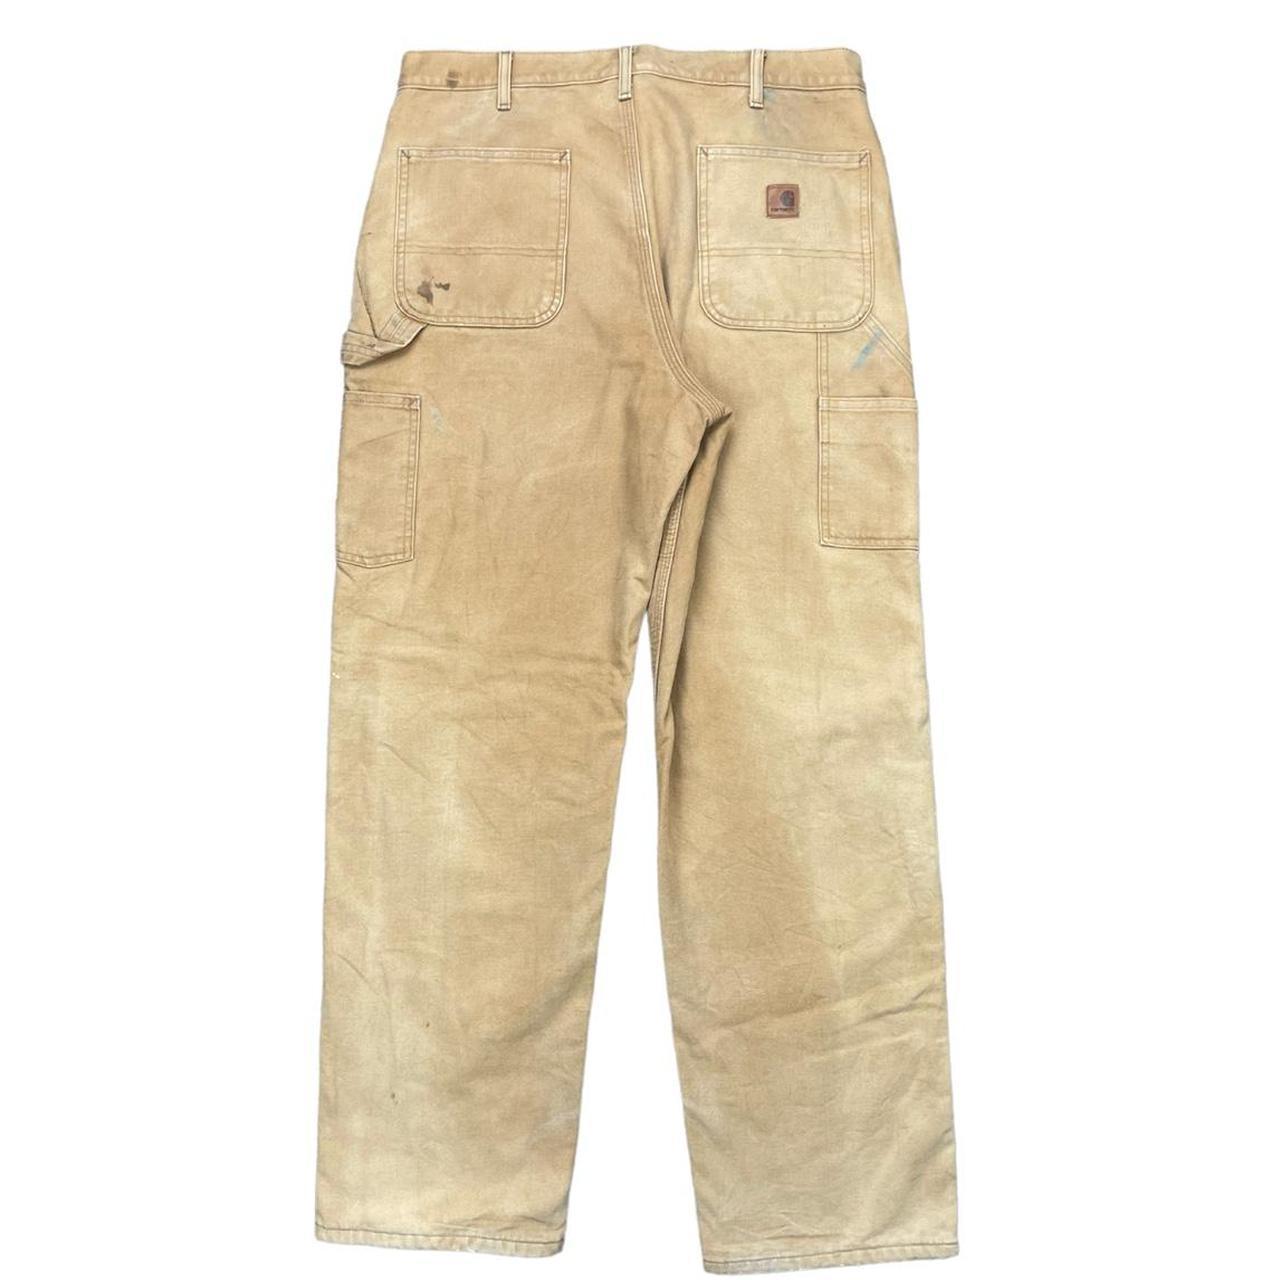 Carhartt Vintage Carpenter Trousers ️Quantity:... - Depop